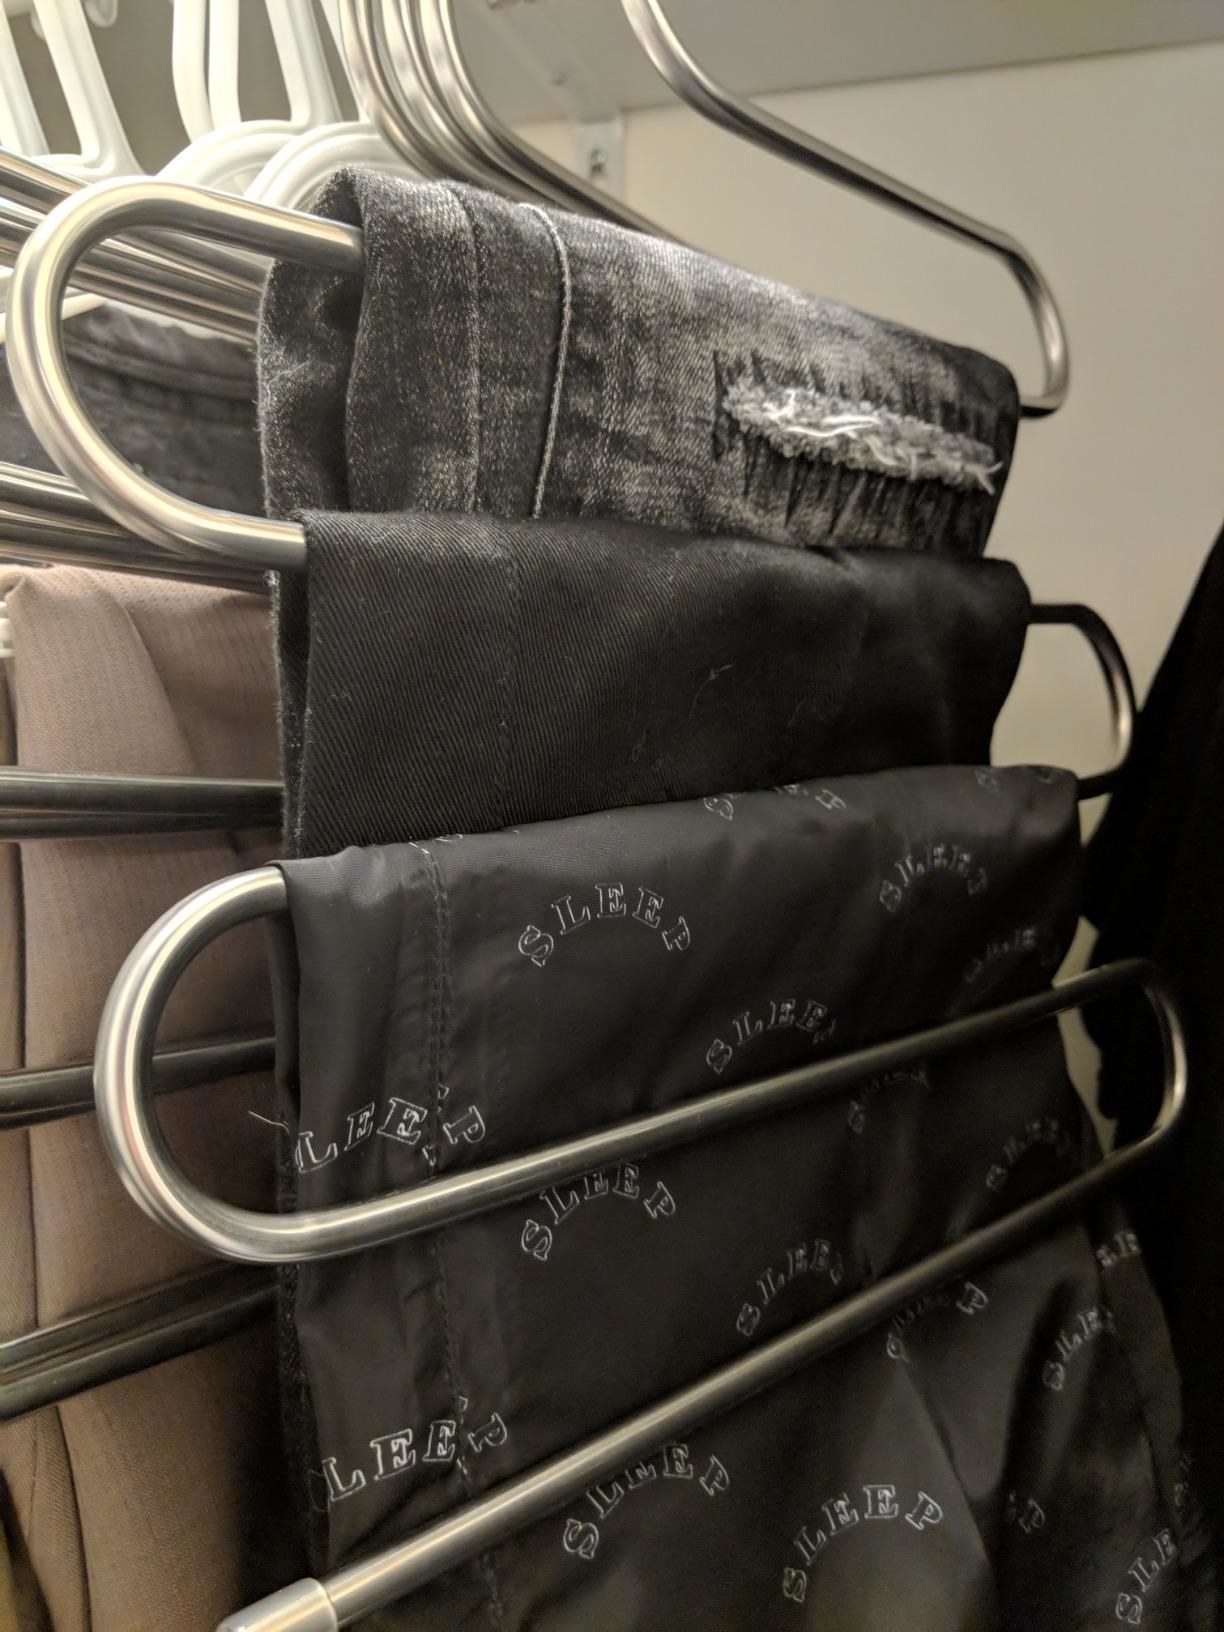 Reviewer image of pants hanging on devesanter 2-shape hanger